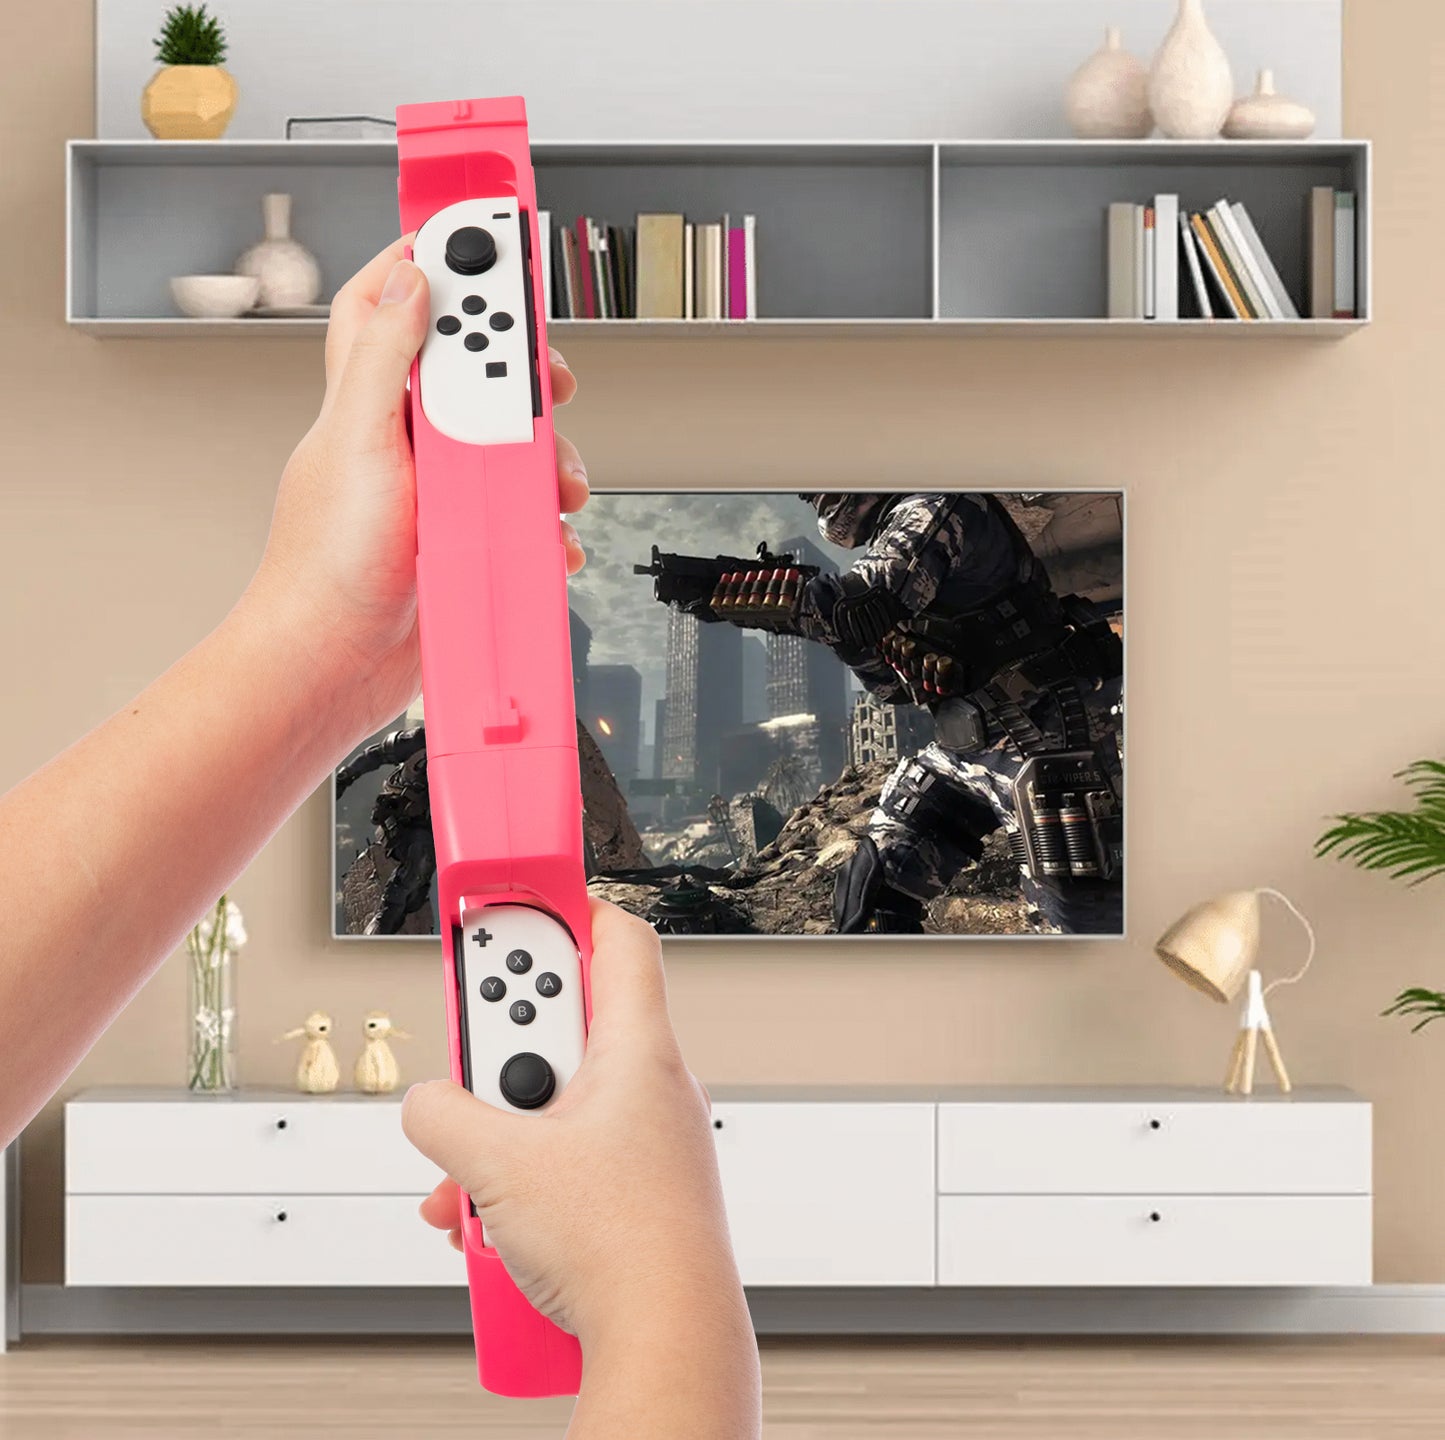 HEATFUN Nintendo Switch Gun Accessory - Pink